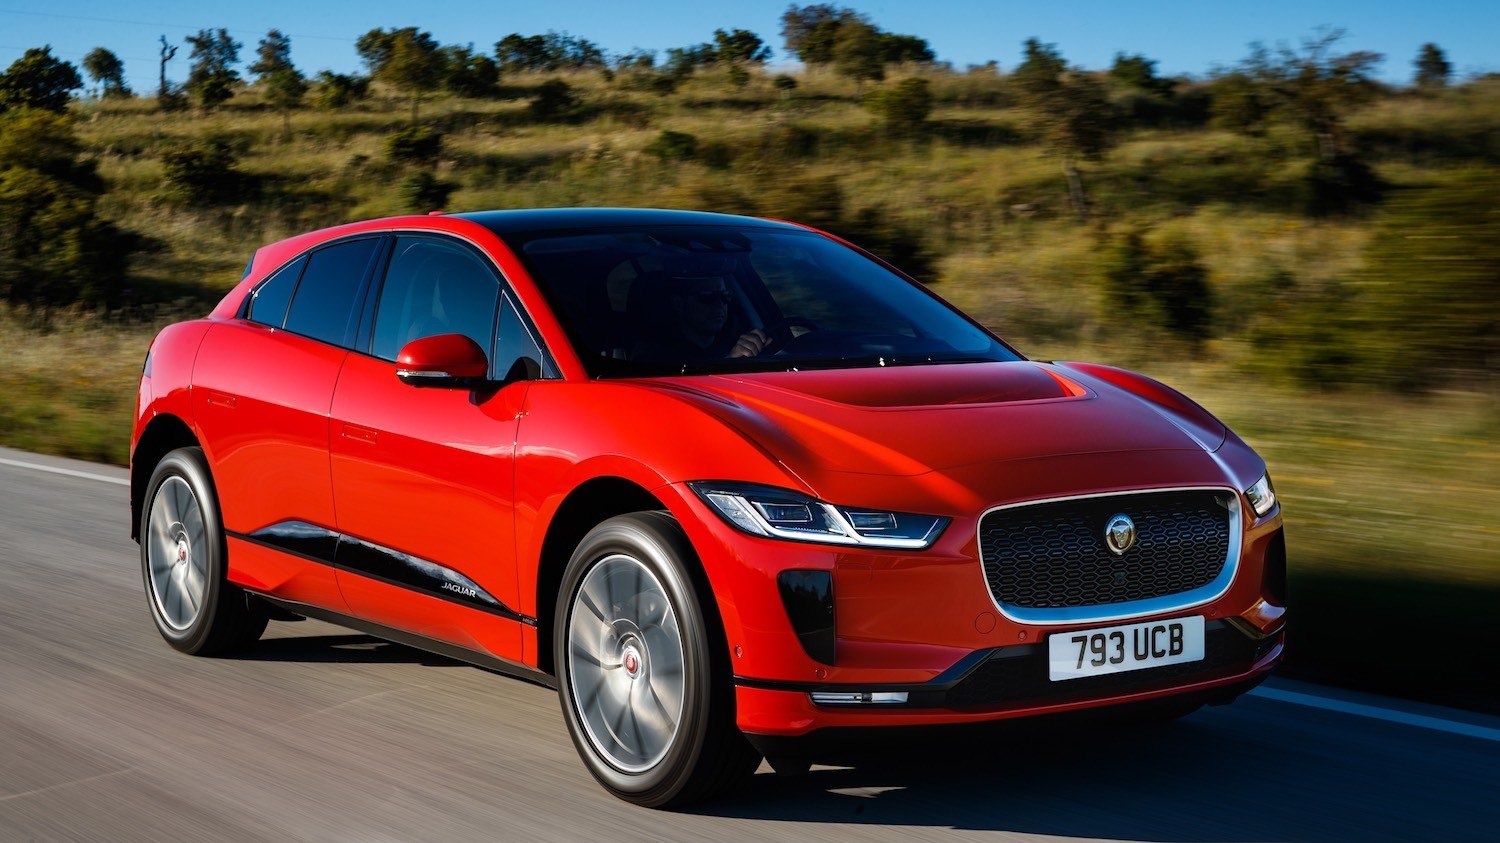 Neil Lyndon reviews the 2018 All-New Jaguar I-Pace Premium Electric SUV 1